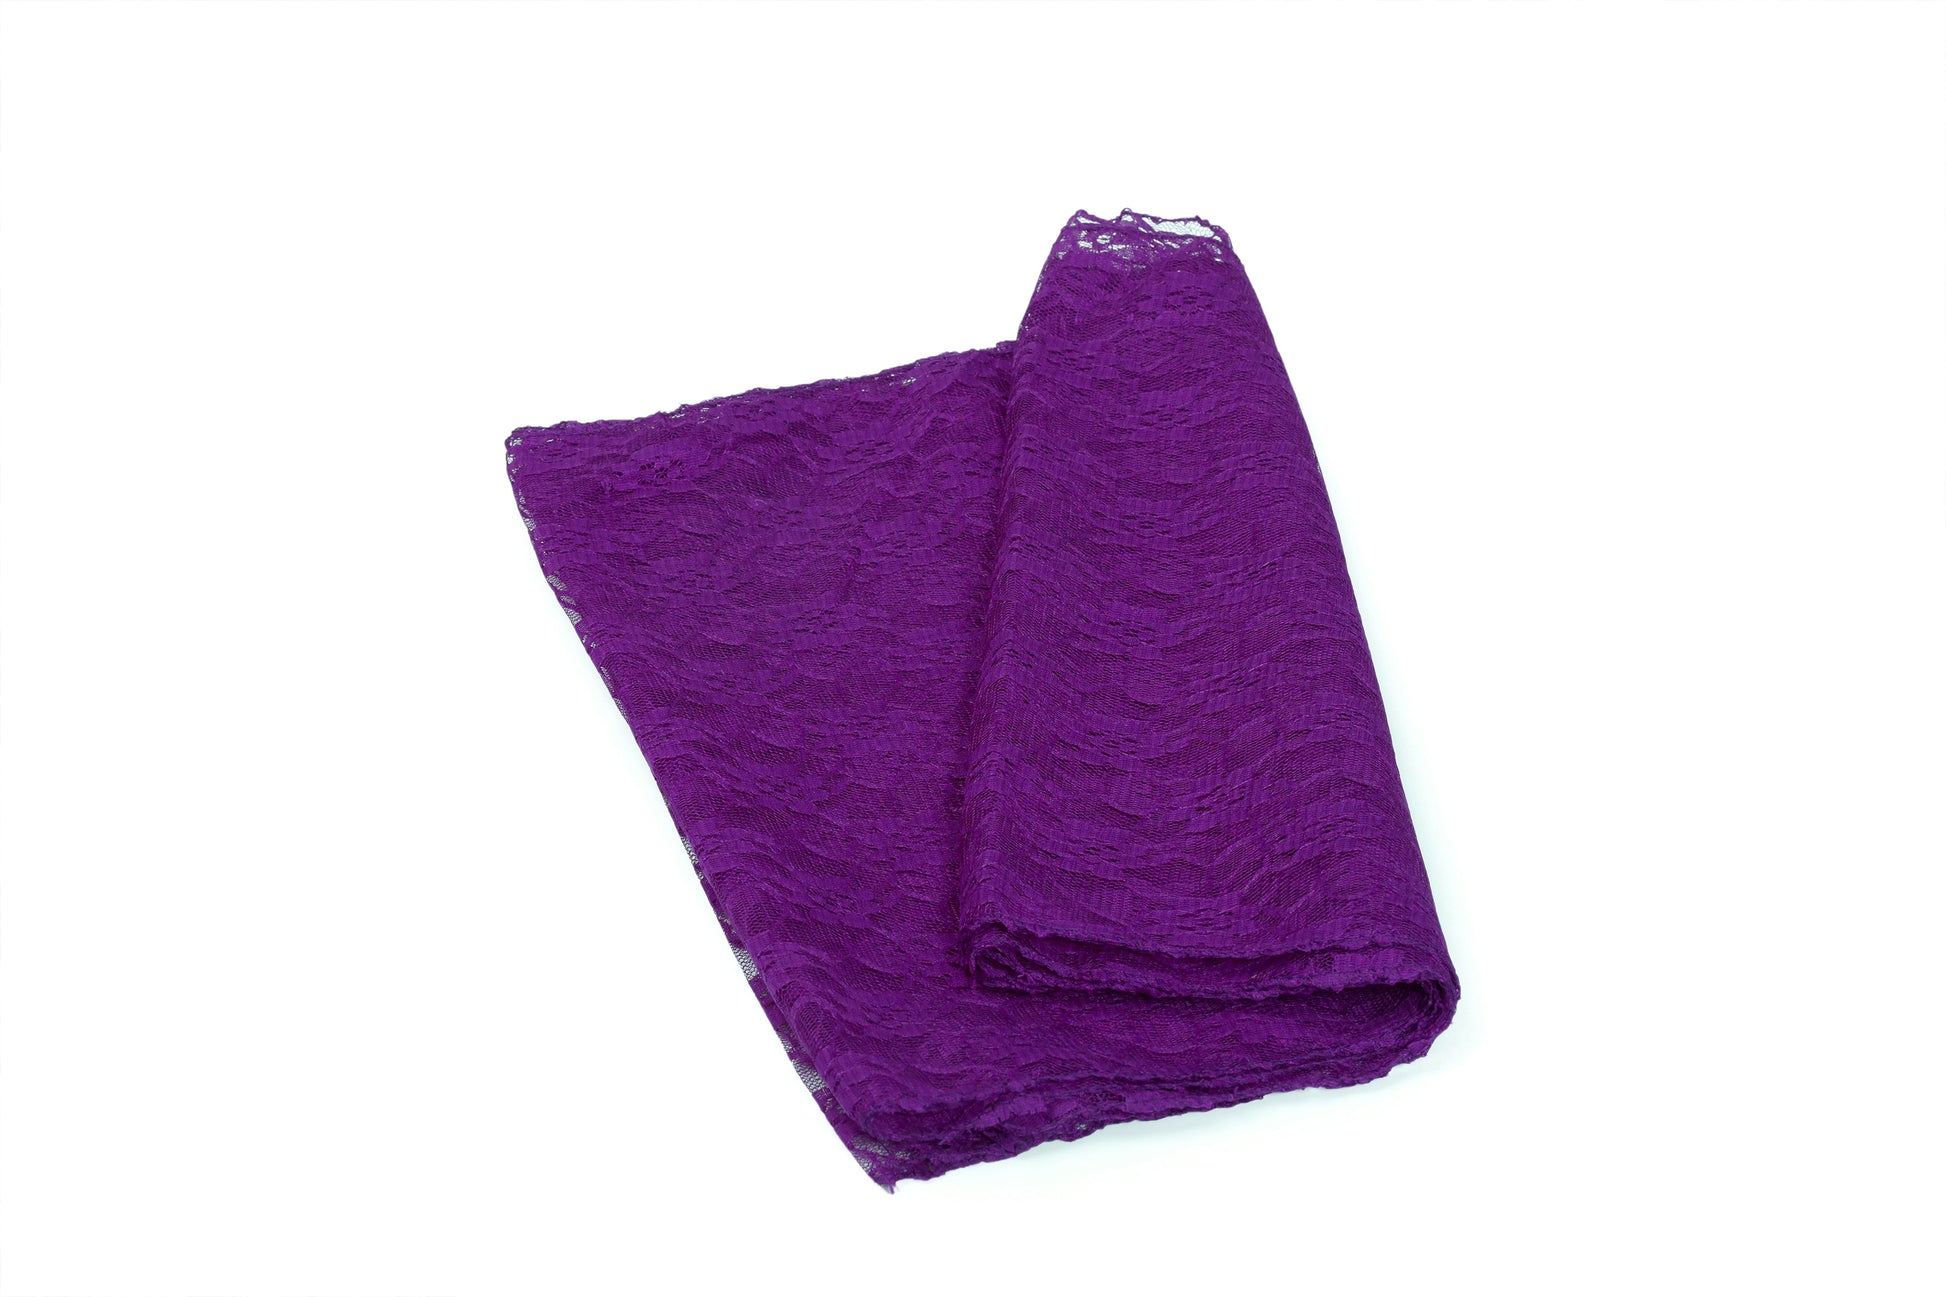 Cadbury Purple,914ceeec-1129-4567-af5c-0698473ea5e4